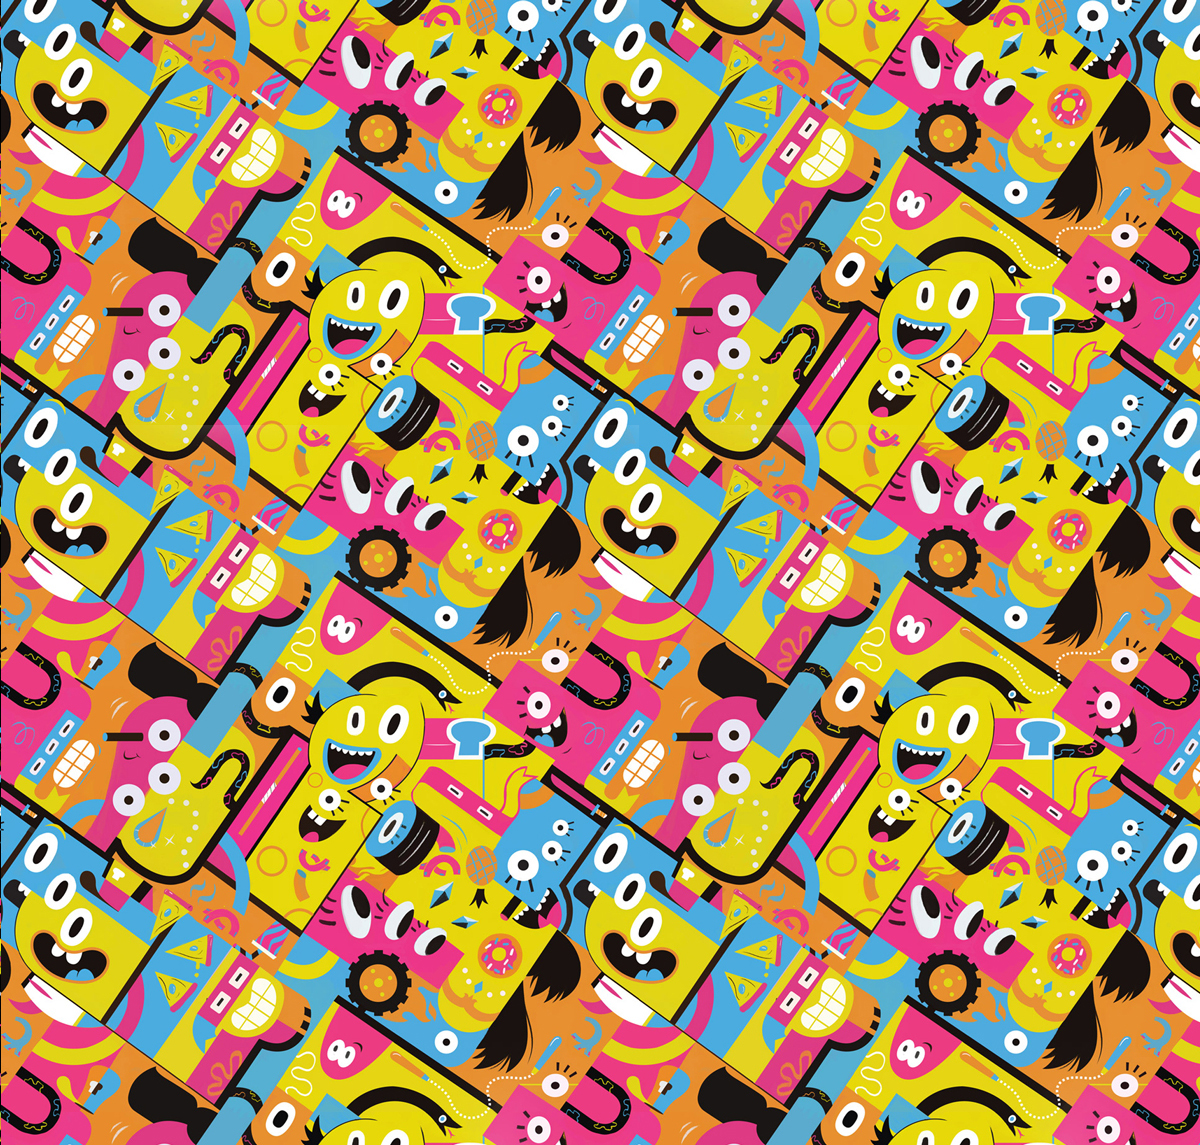 nickelodeon color pattern colorful raport seamless molinet Nick.com ninja Turtles  spongebob hip ilustracion modern "juan molinet"